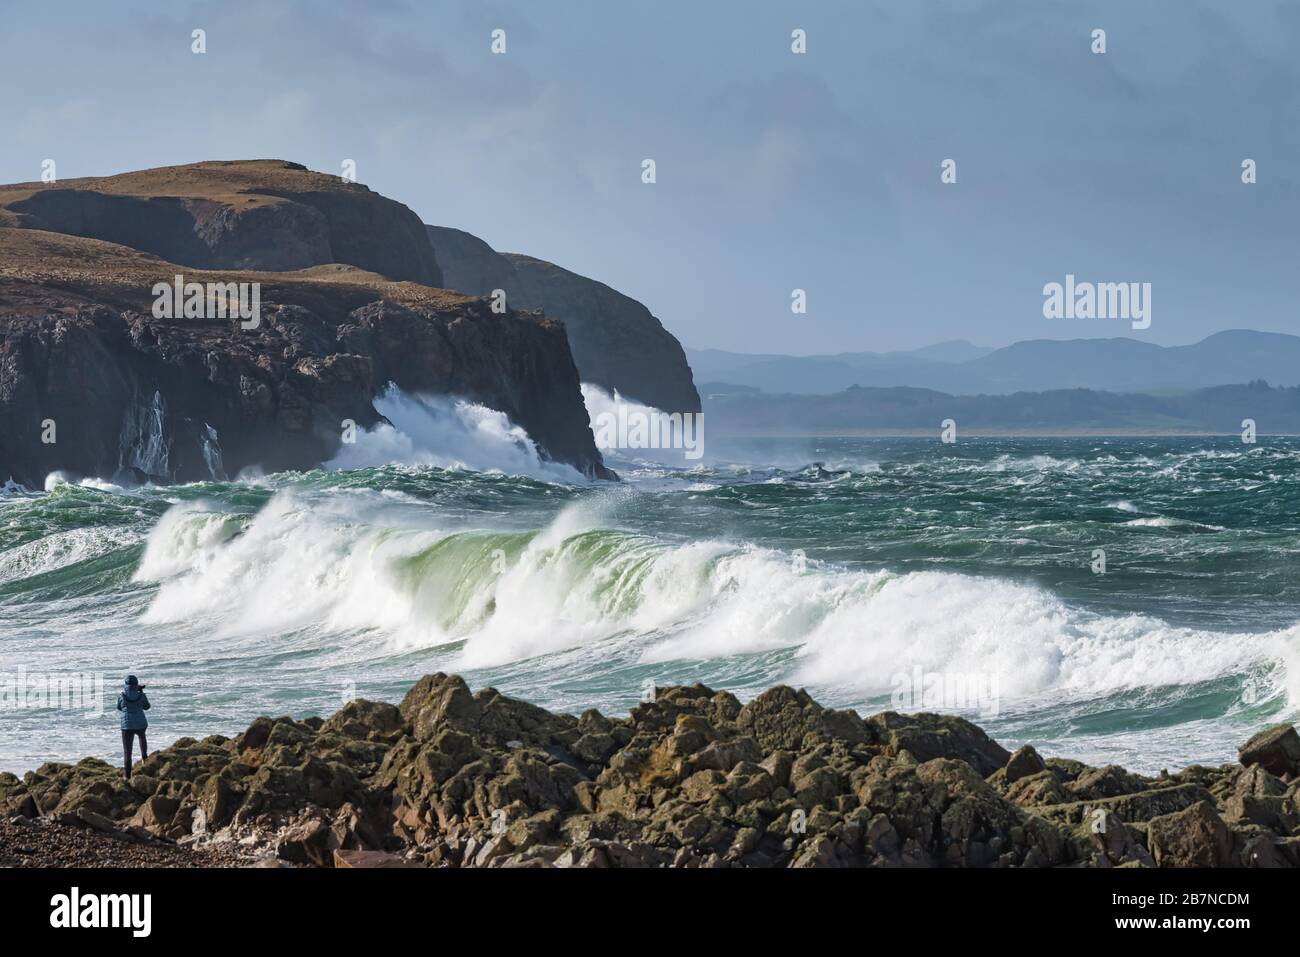 Fotograf, der auf dem felsigen Ufer des Dunff County Donegal Ireland große Wellen aus dem Atlantik fotografiert Stockfoto